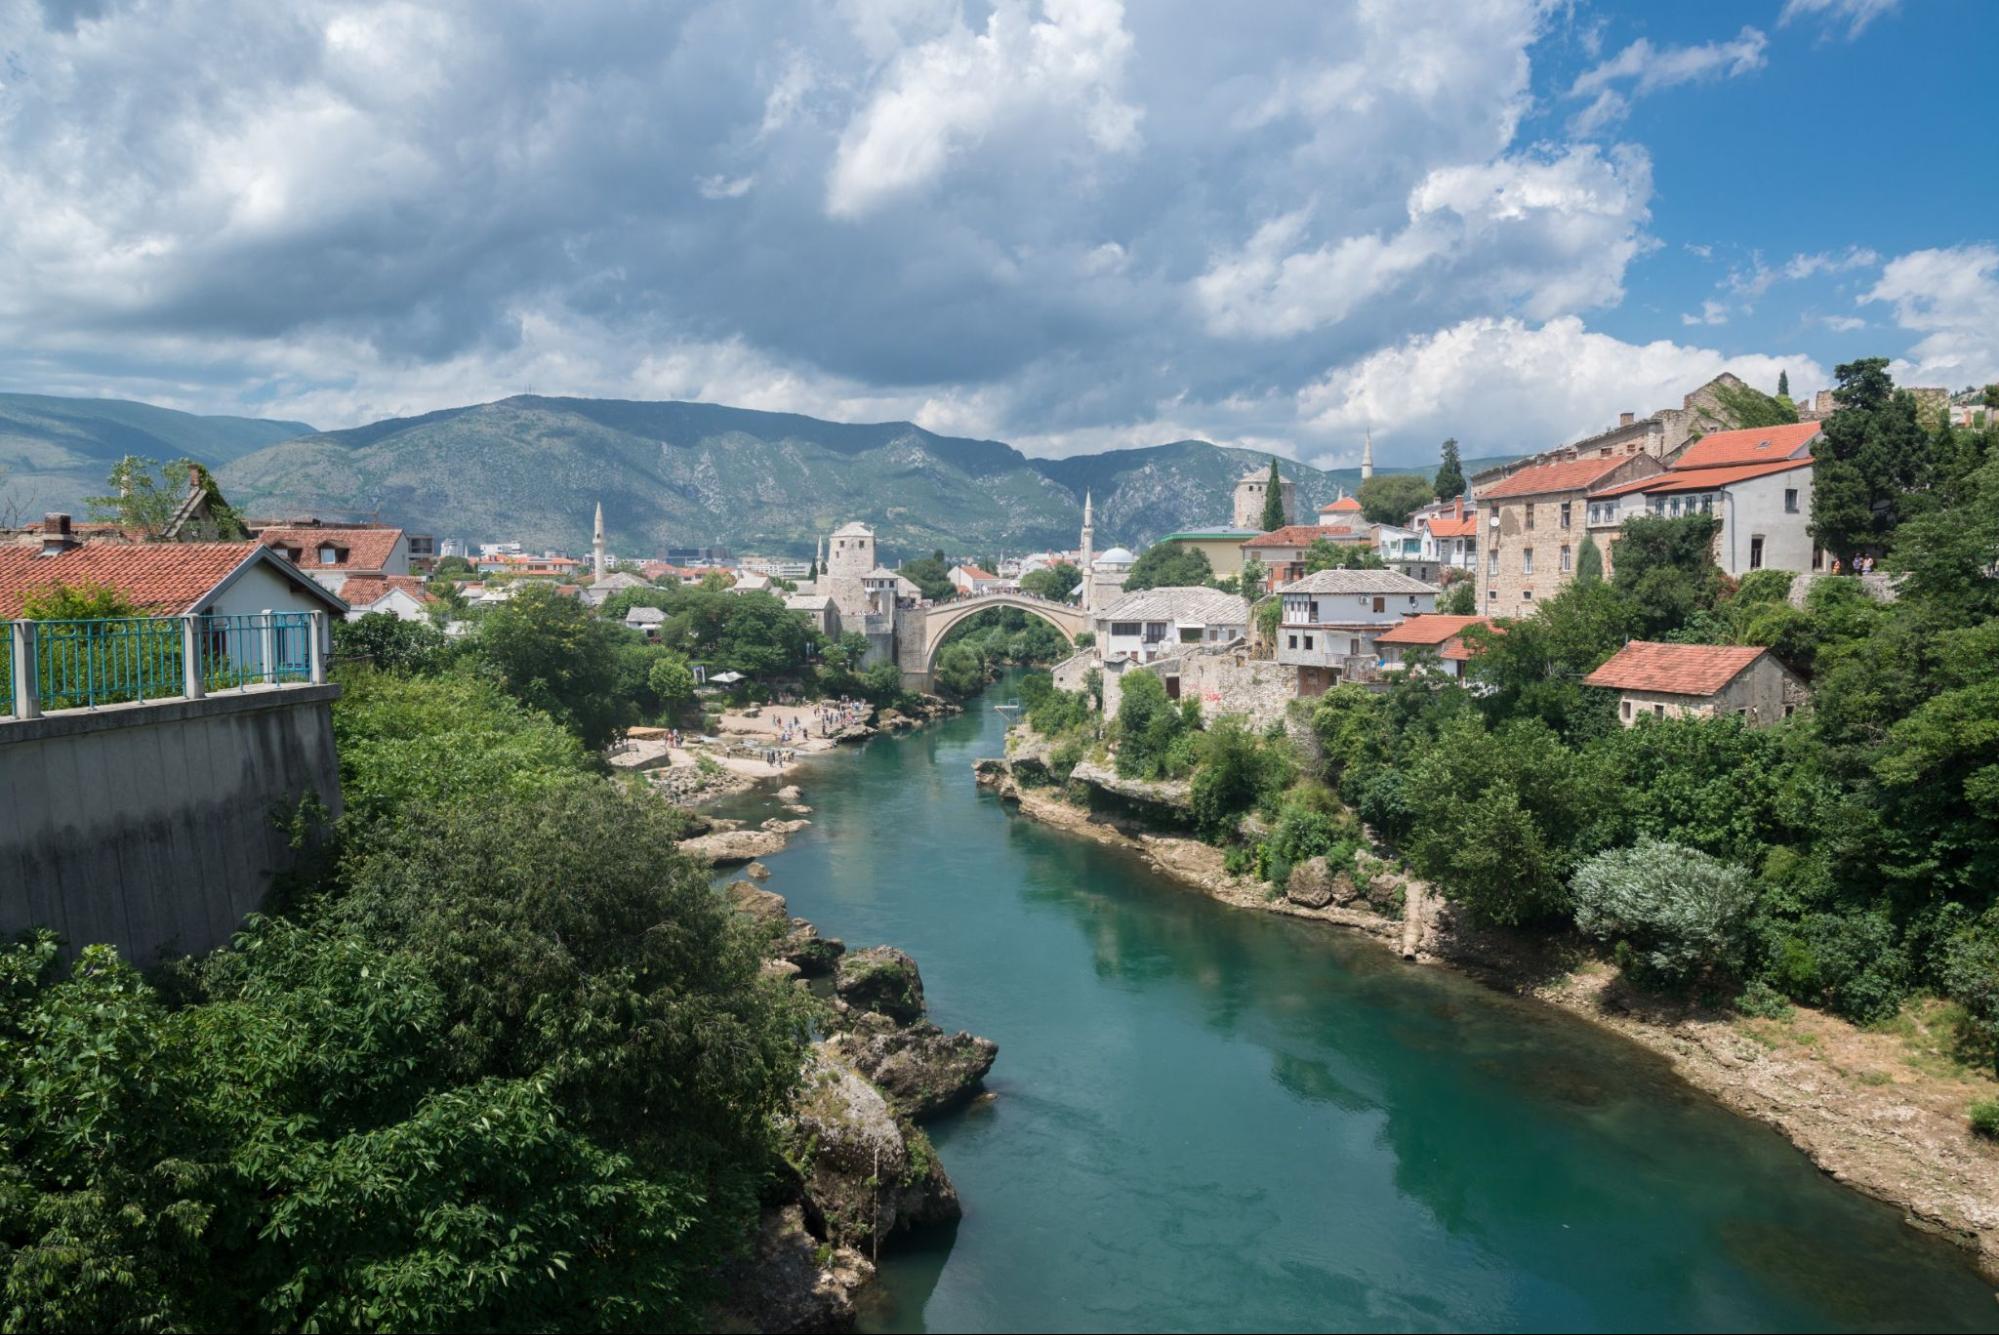 Mostar, Bosnia and Herzegovina, circa july 2016: The Old Bridge in Mostar, Bosnia and Herzegovina